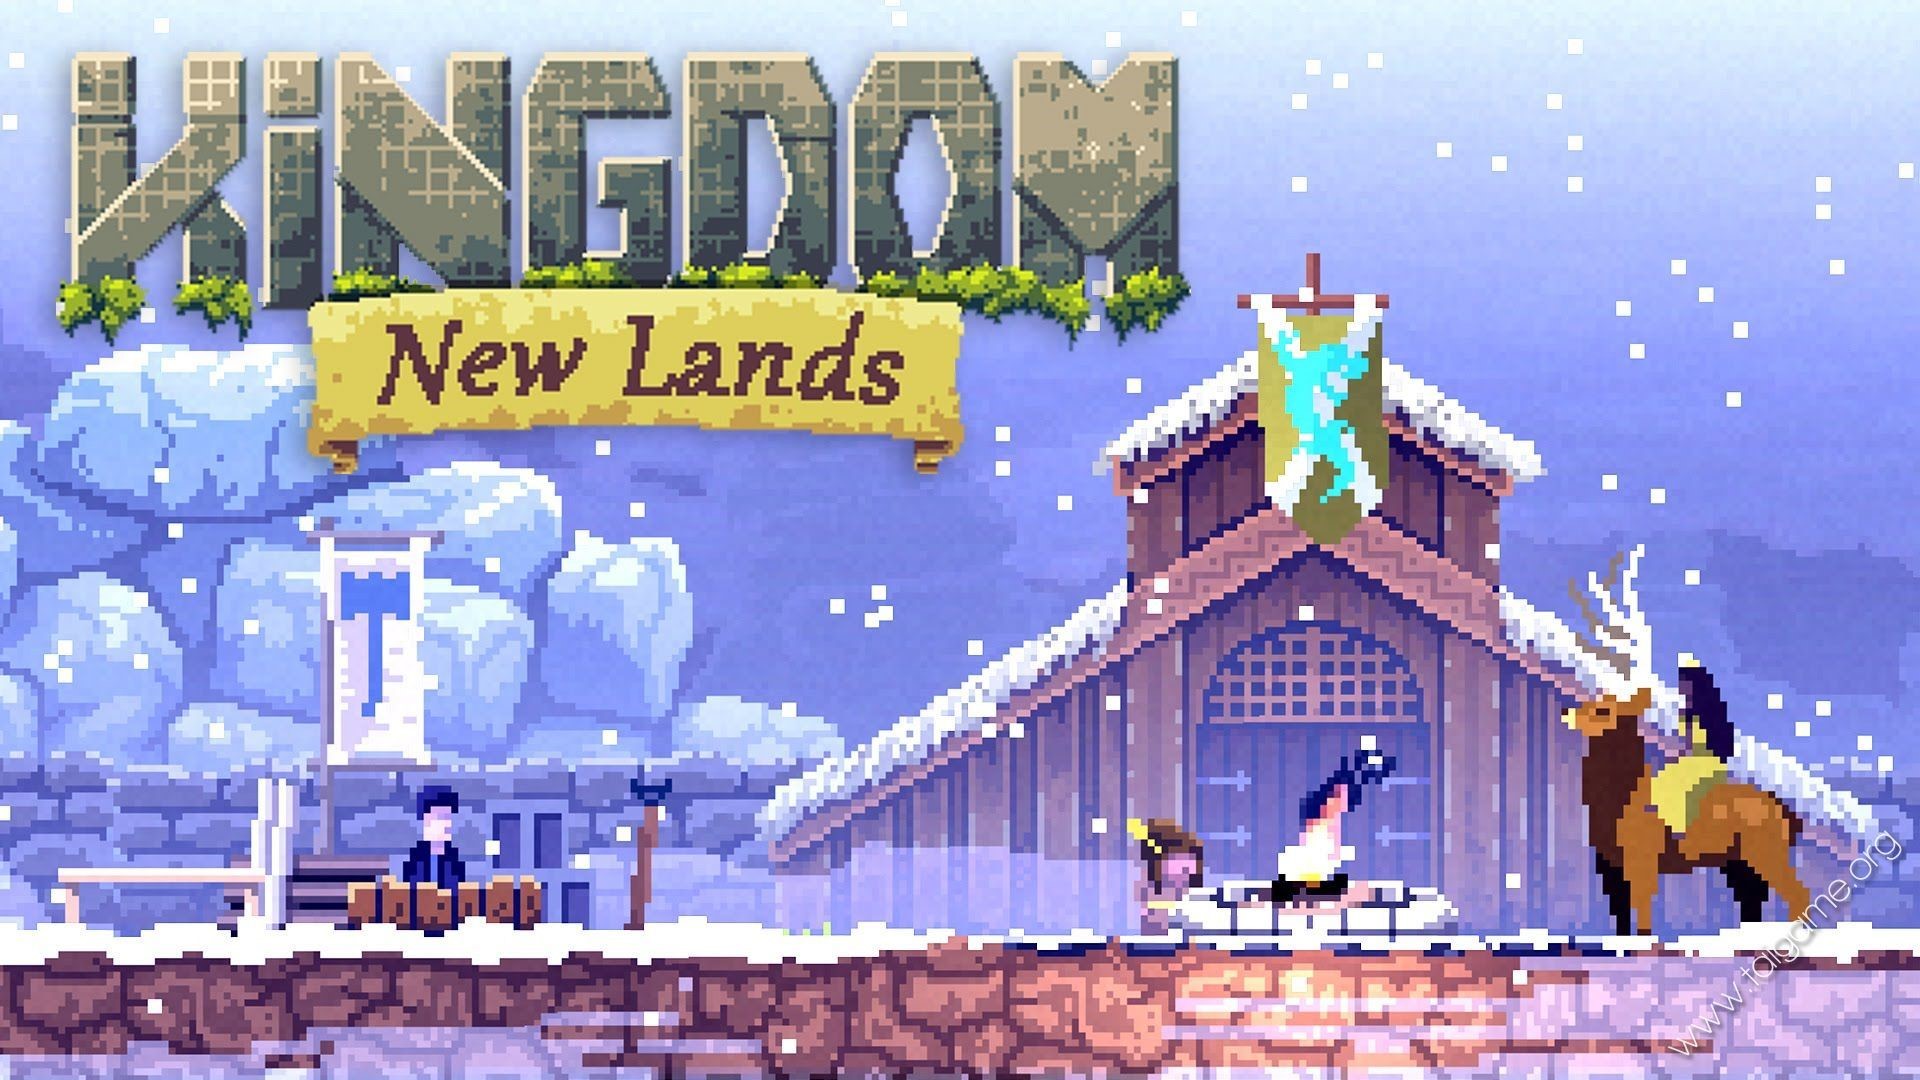 New lands 1. Игра Kingdom New Lands. Kingdom New Lands 2. Kingdom (игра). Рыцарь Kingdom New Lands.